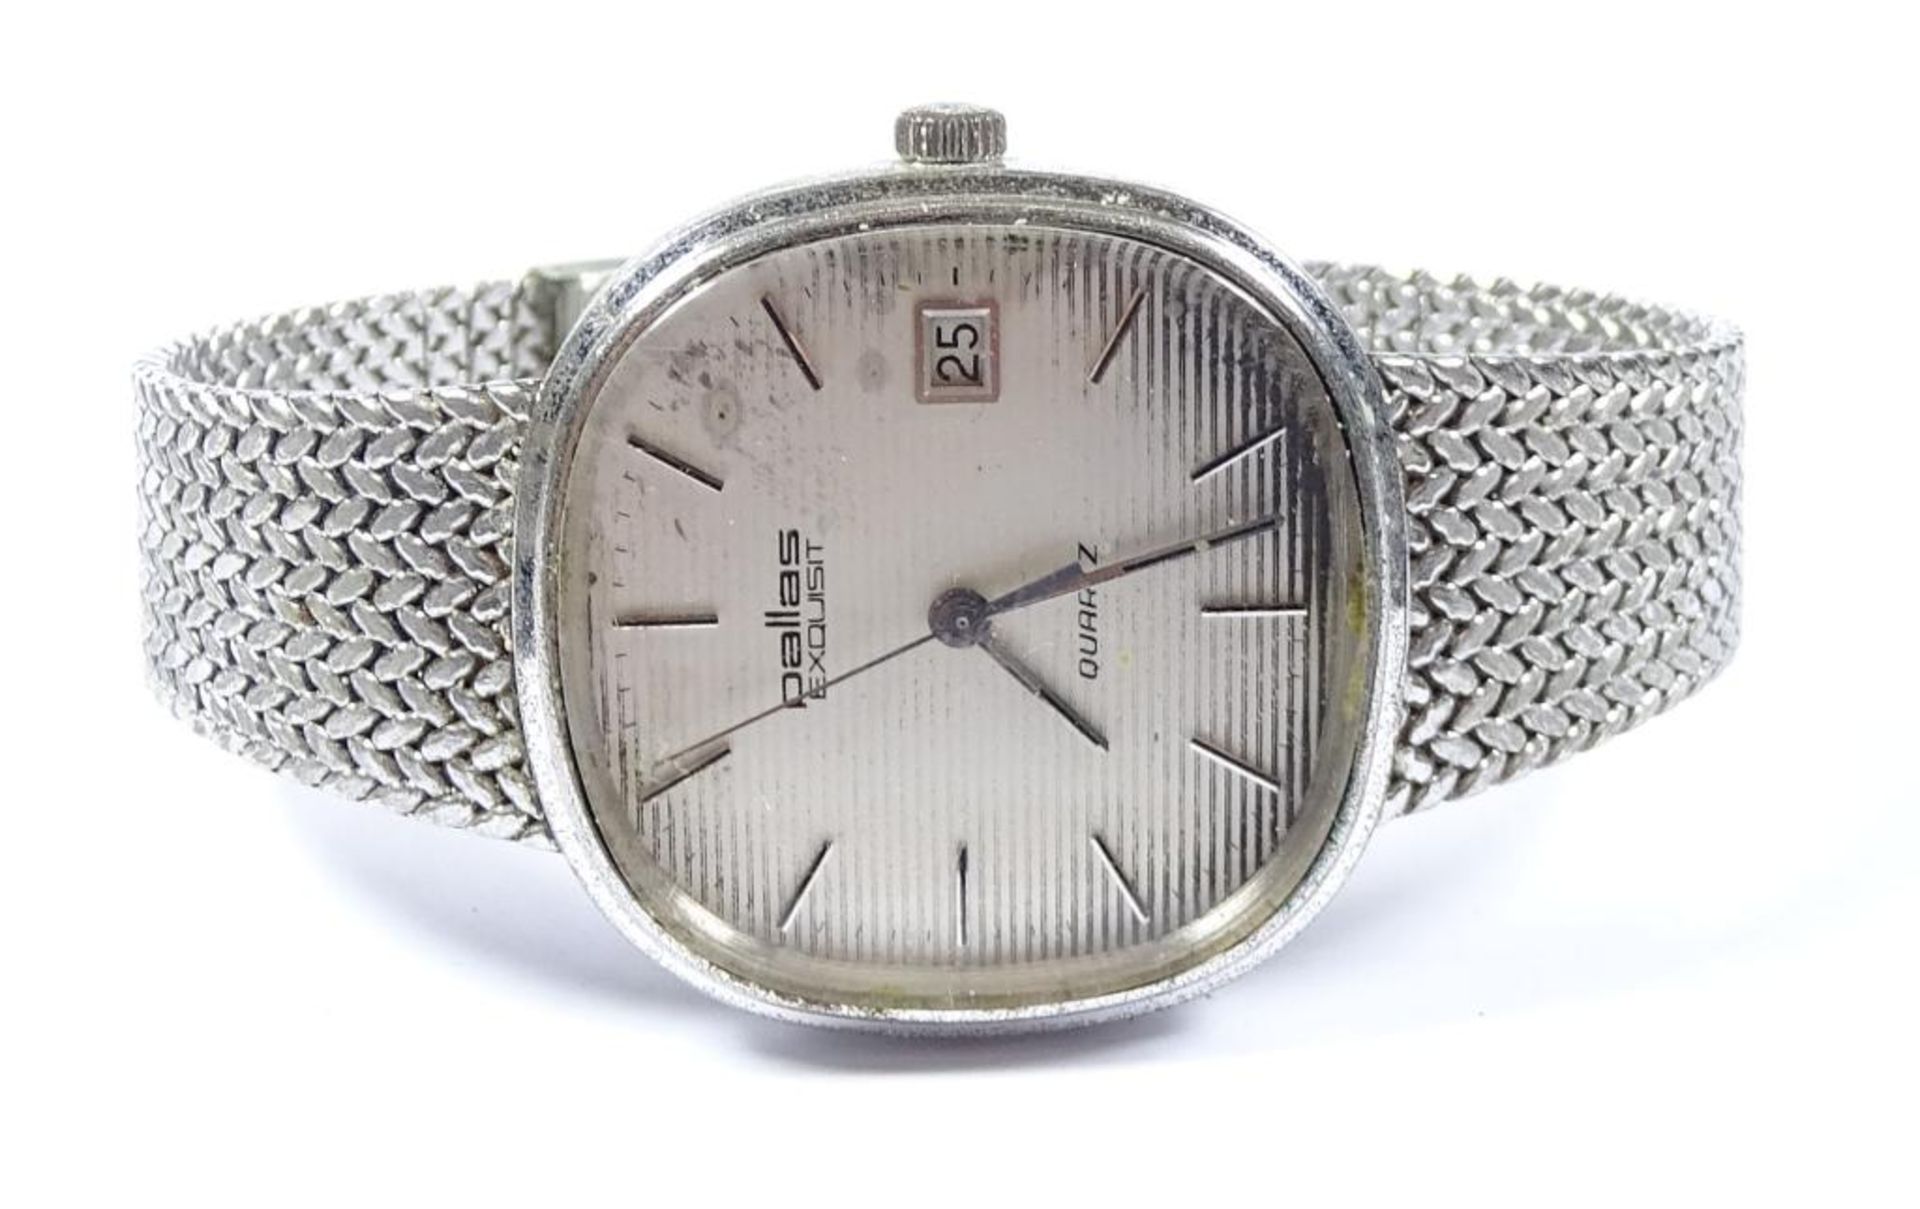 Armbanduhr "Pallas-exquisit",Quartz,Funktion nicht geprüf